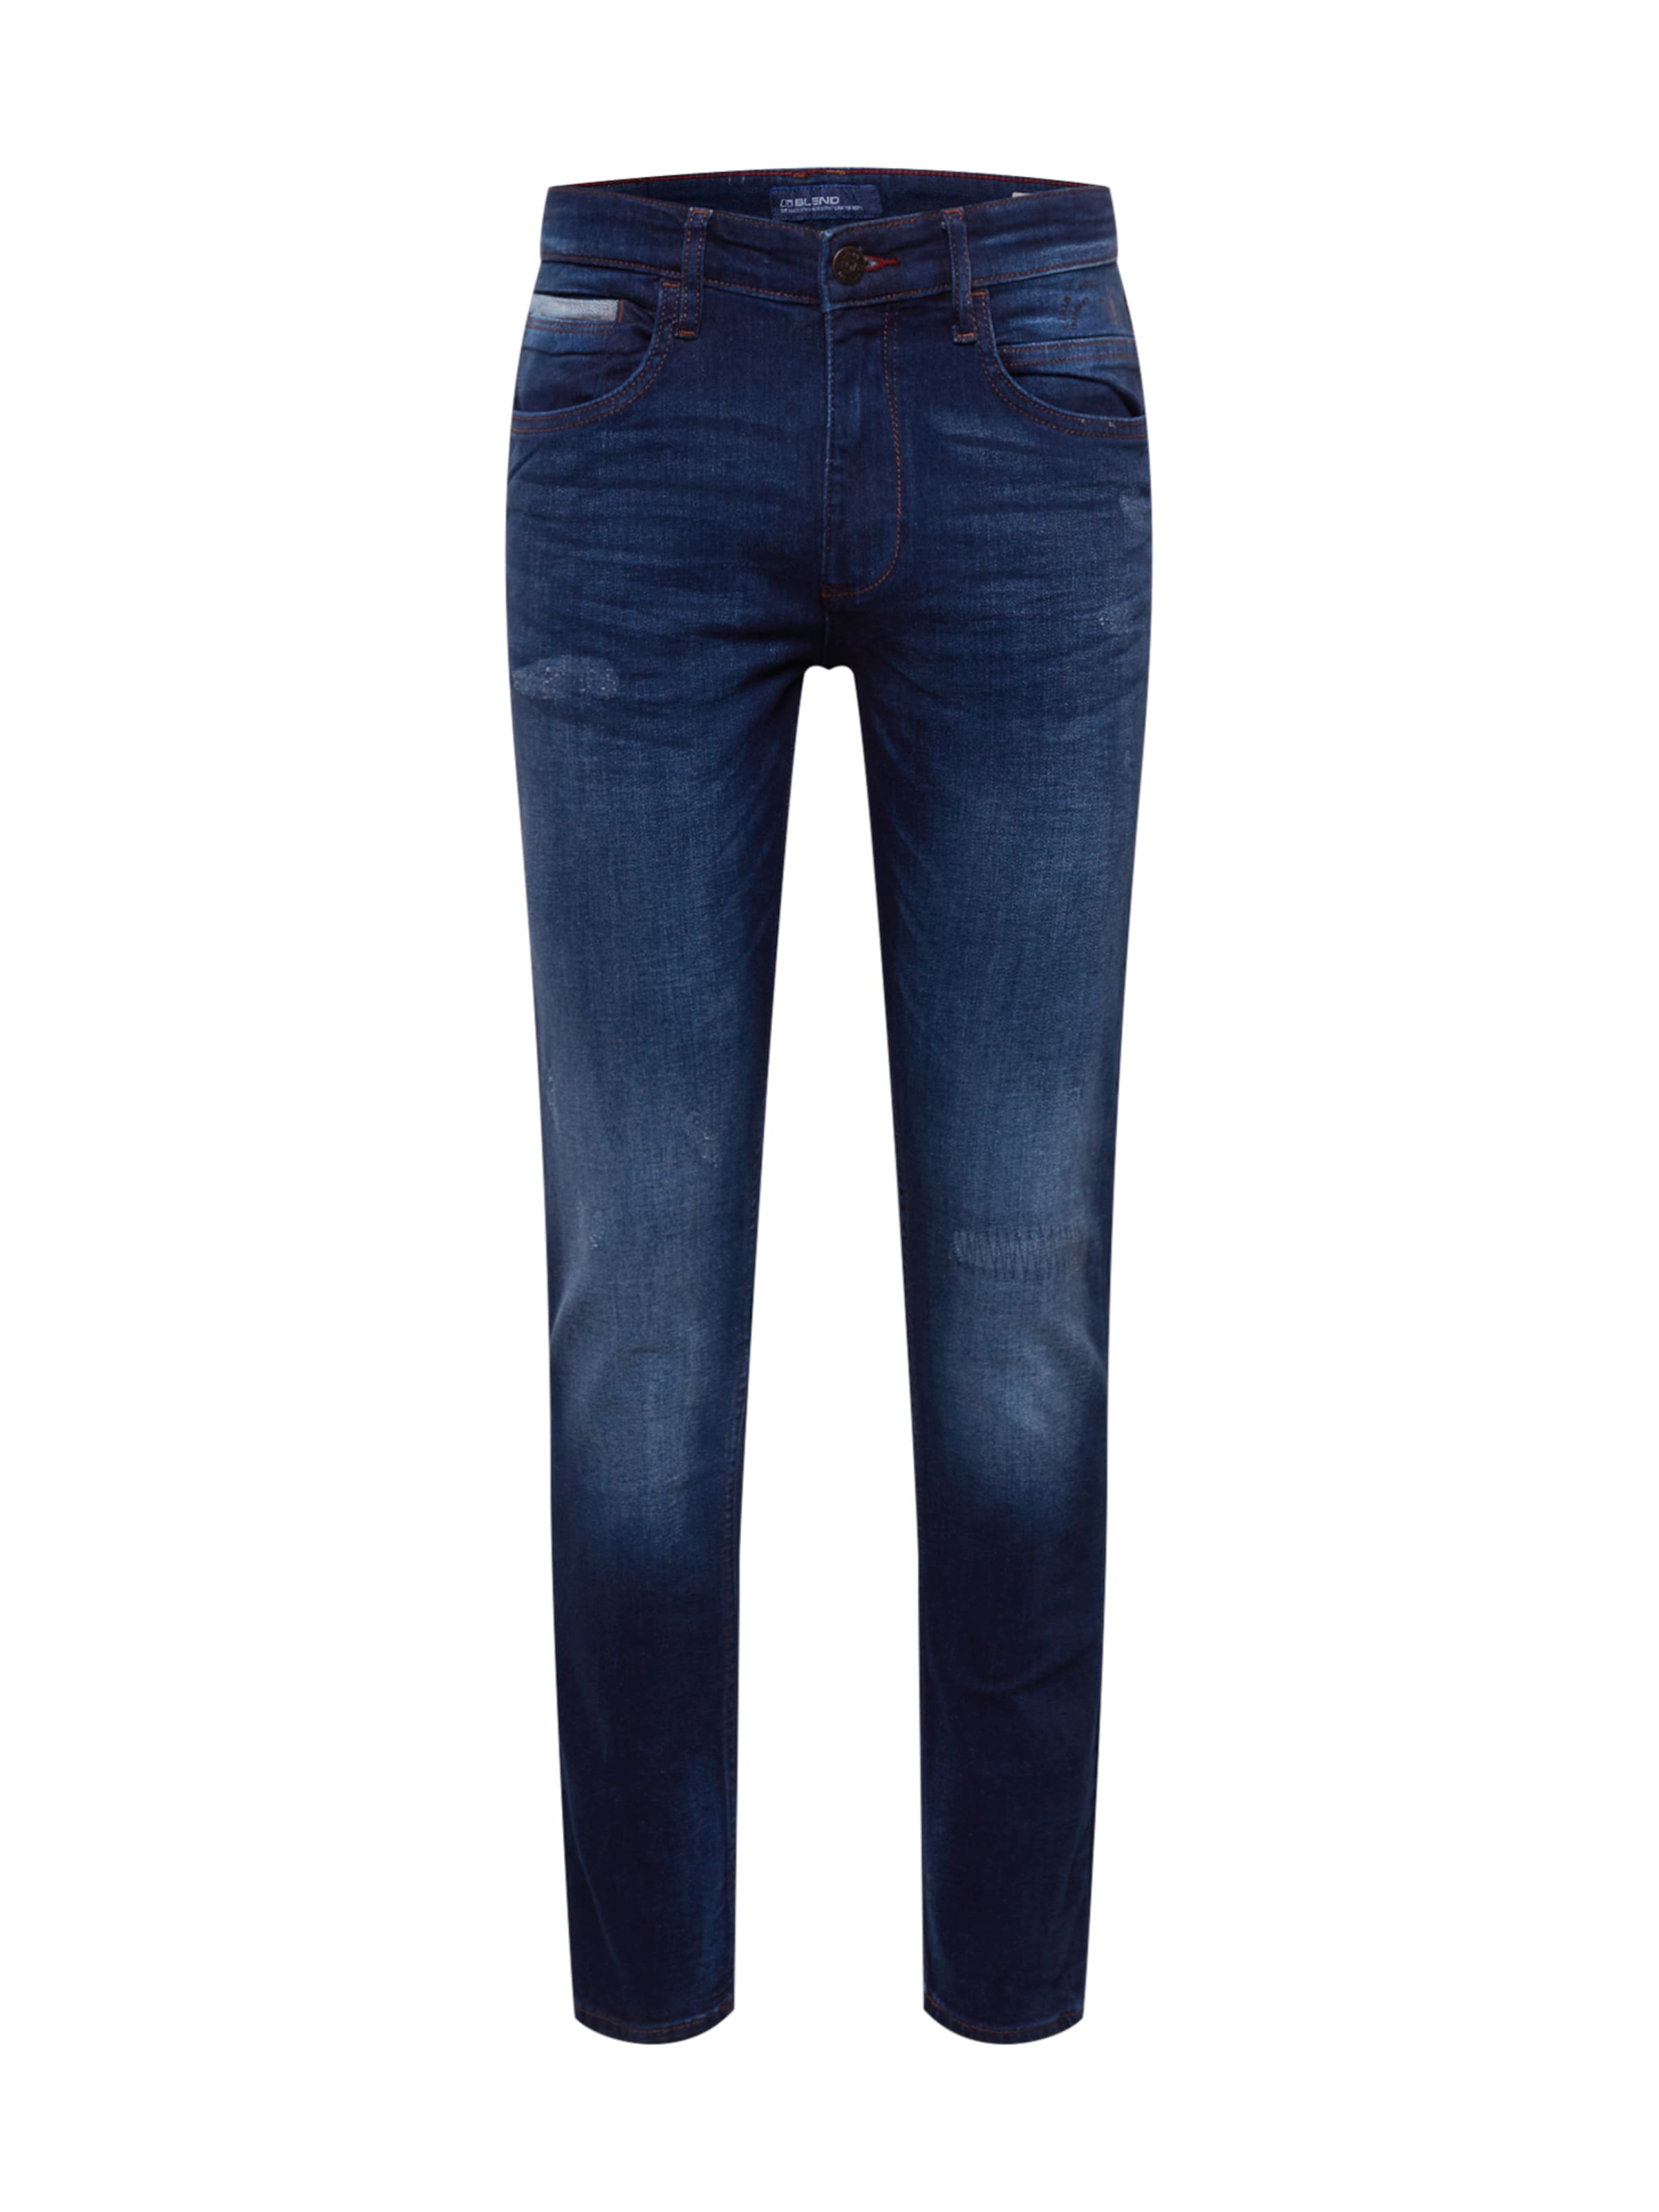 XF4Io Uomo BLEND Jeans Twister in Blu Scuro 